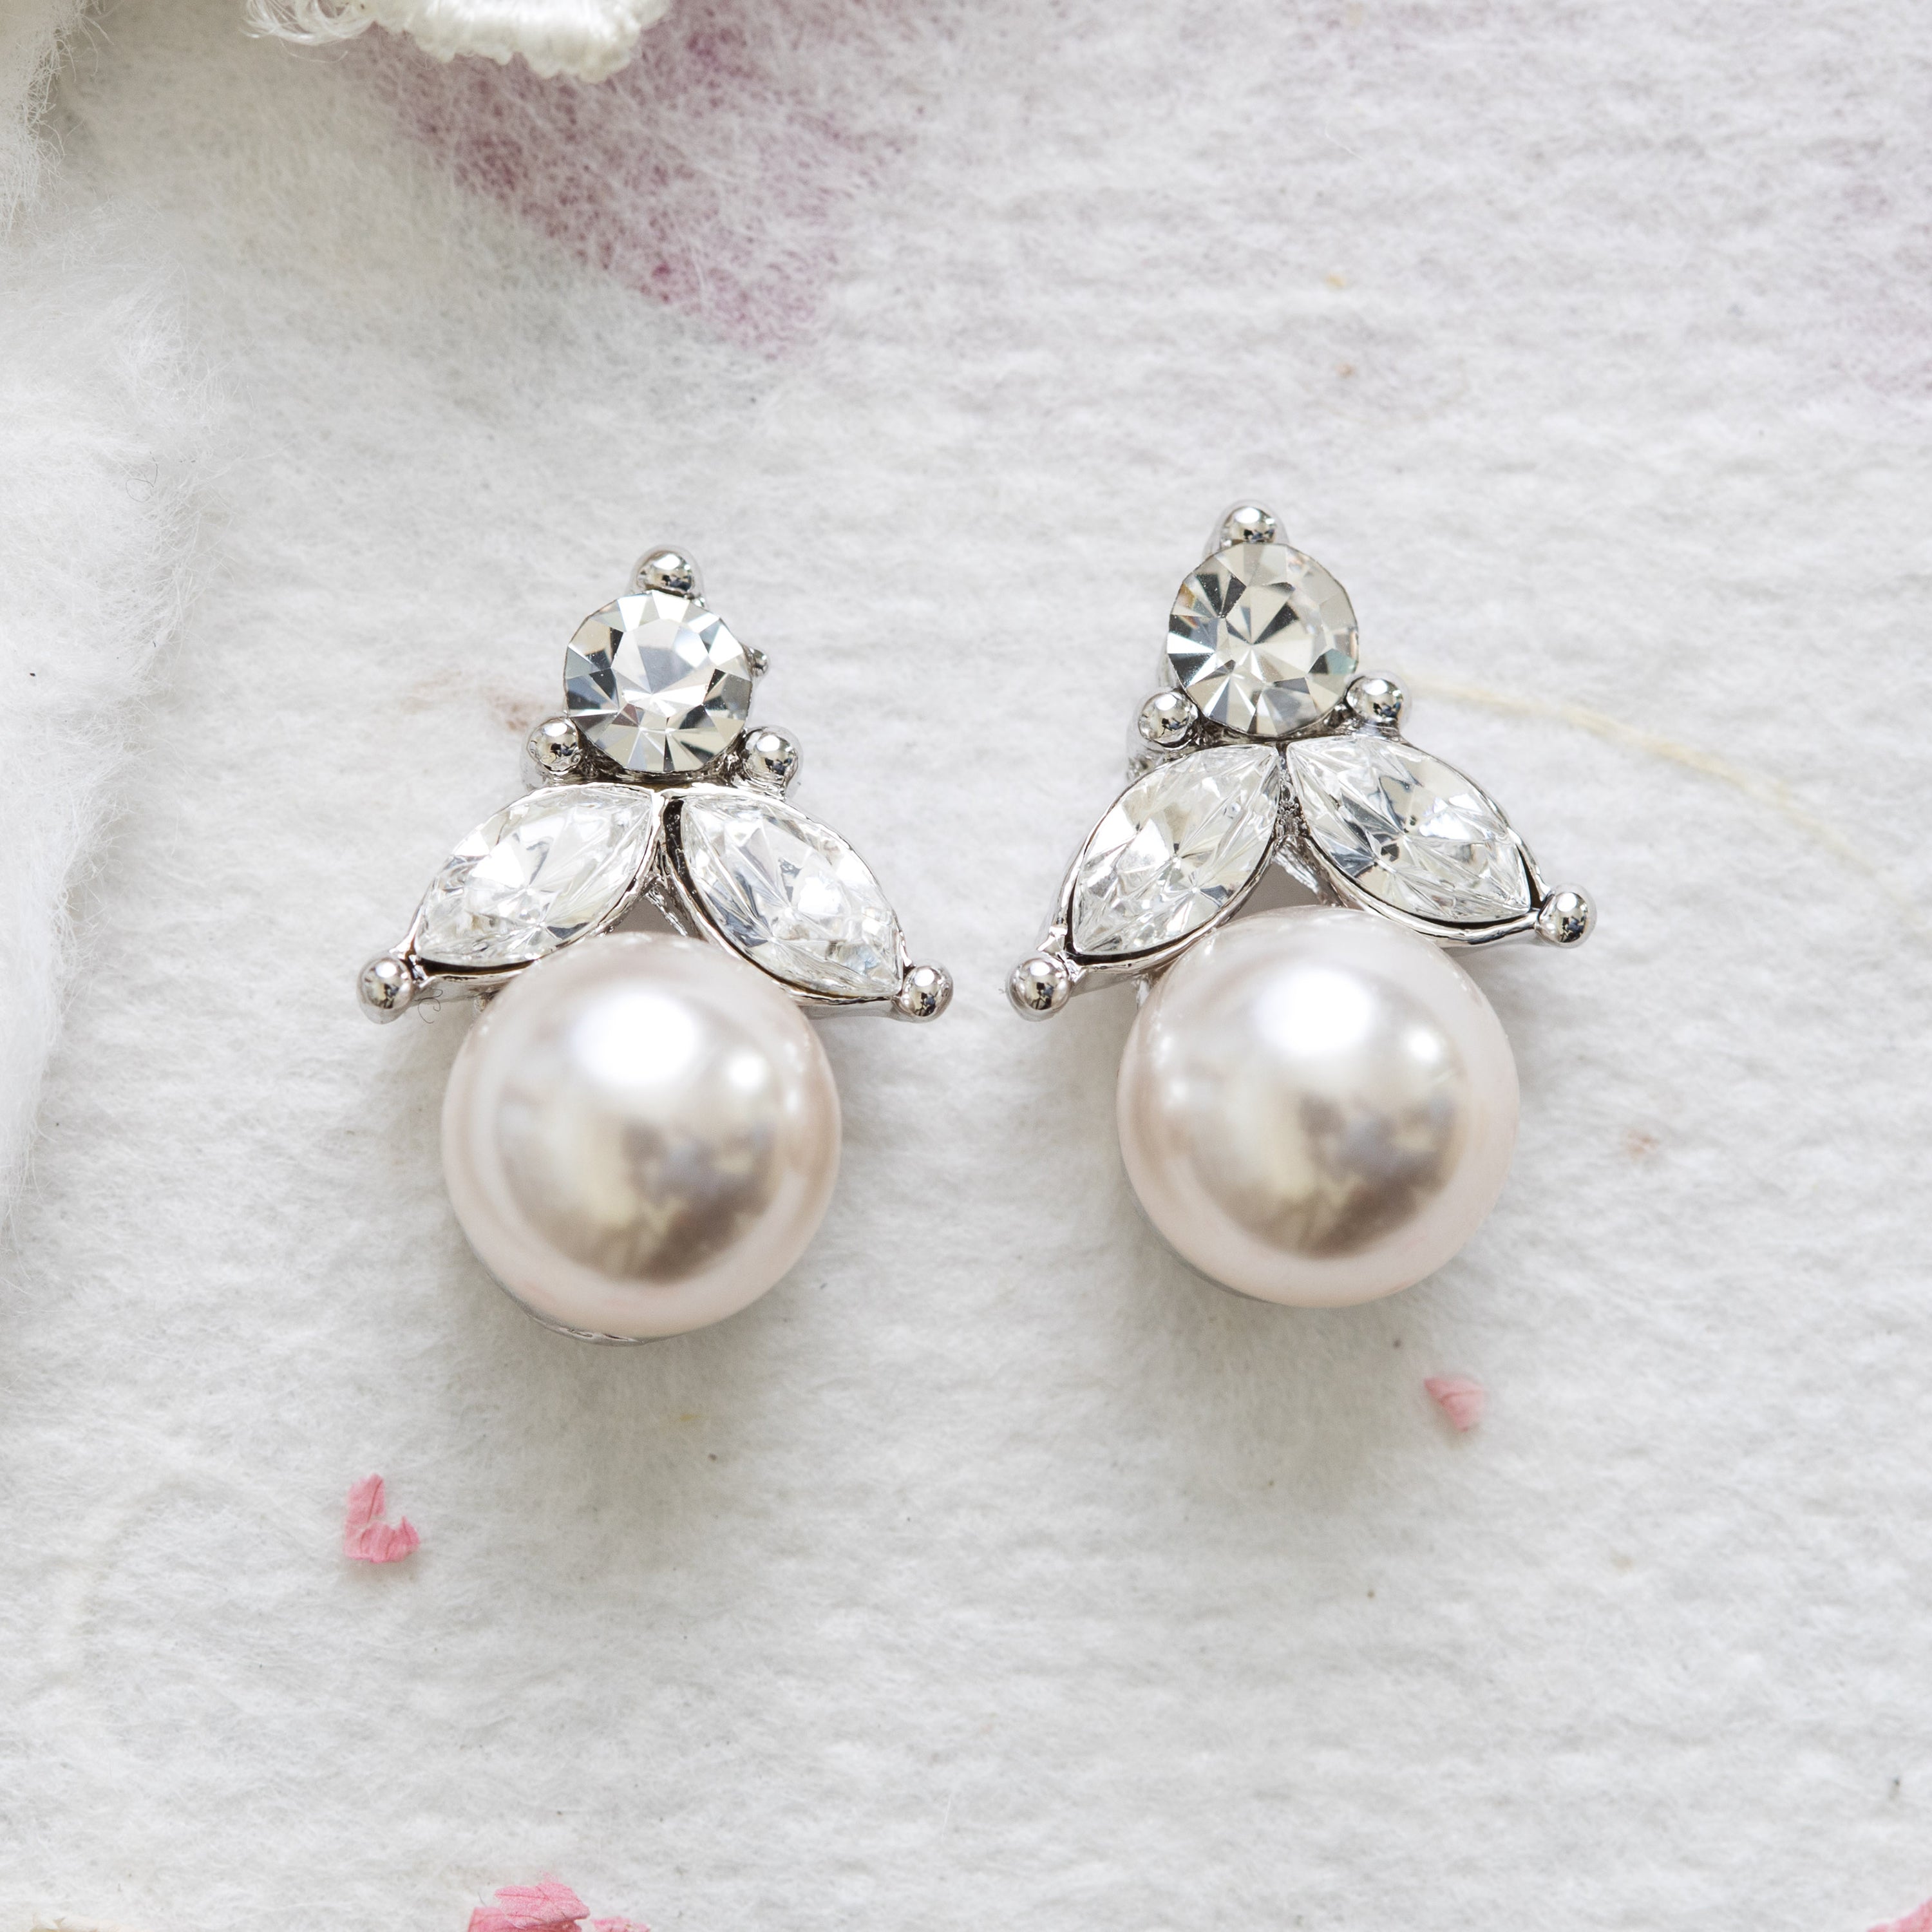 Serenity crystal and pearl earrings